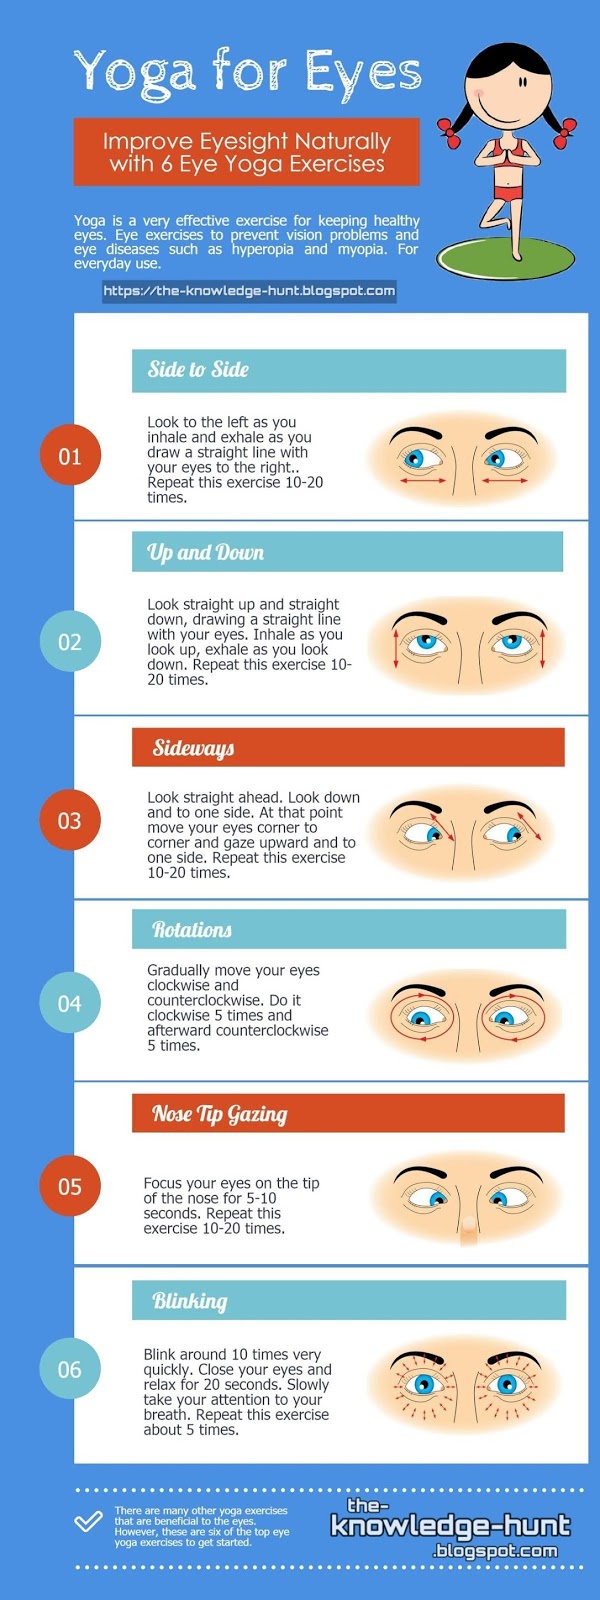 How to improve eyesight